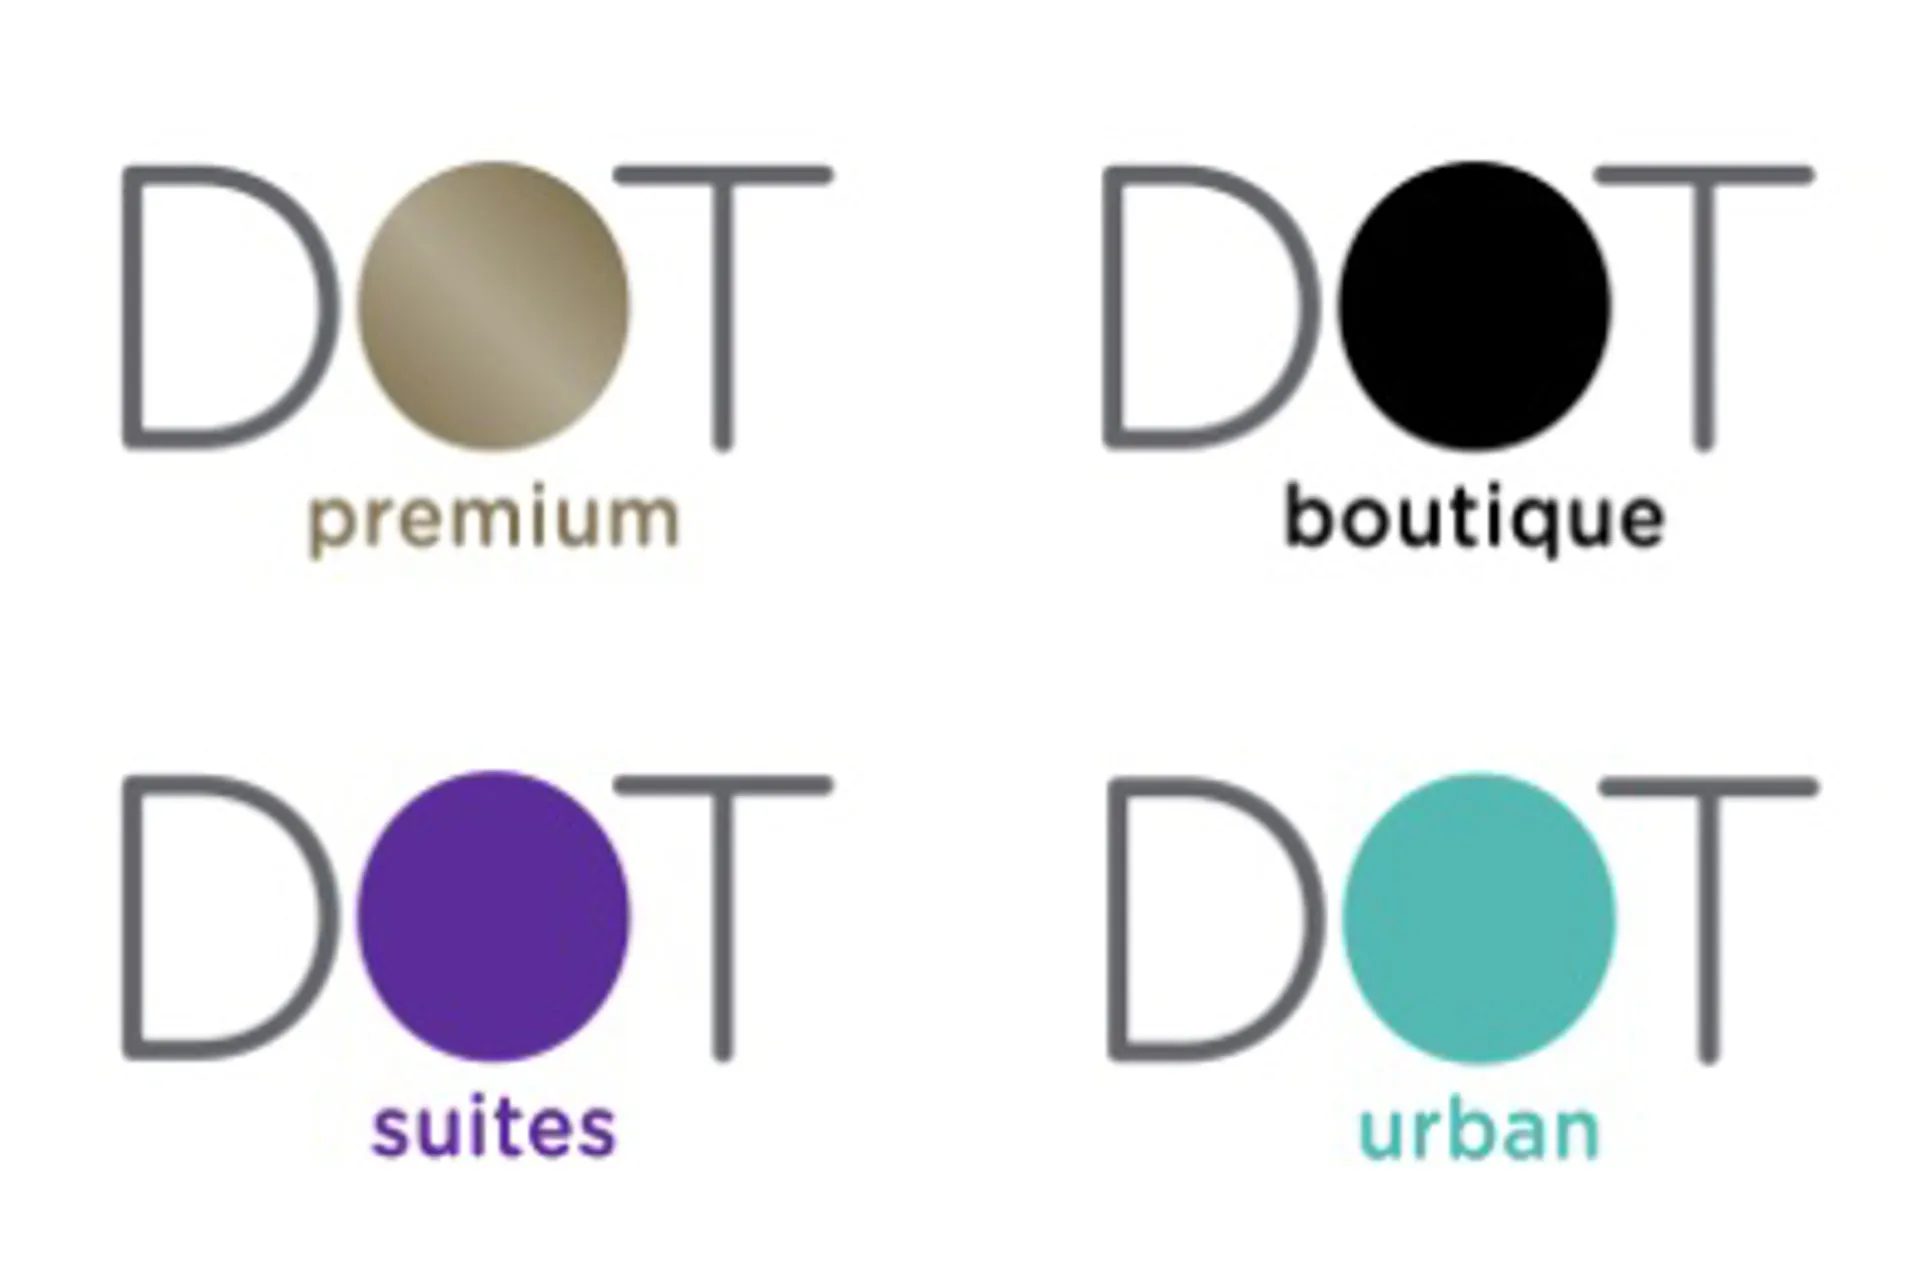 DOT Hotels unifica 100 hoteles en 10 países bajo la marca "by DOT"